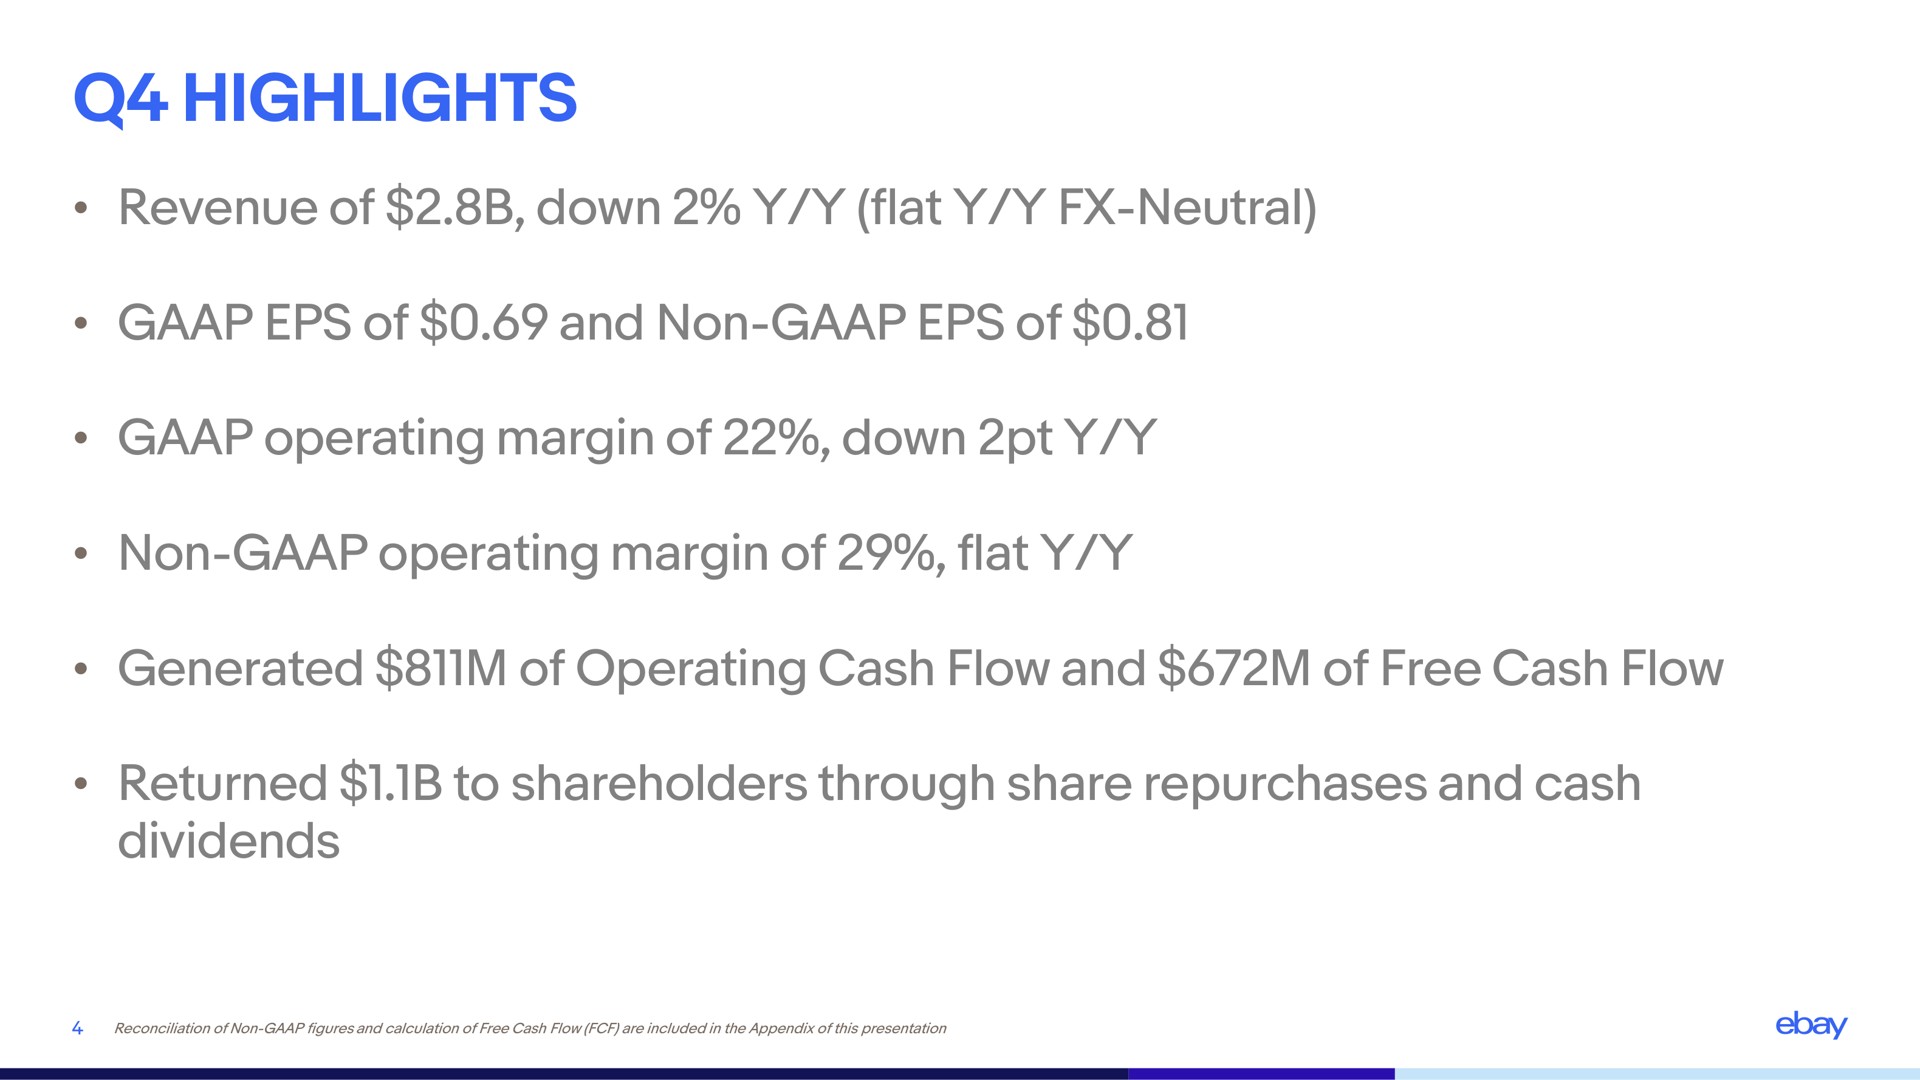 highlights revenue of down flat neutral | eBay